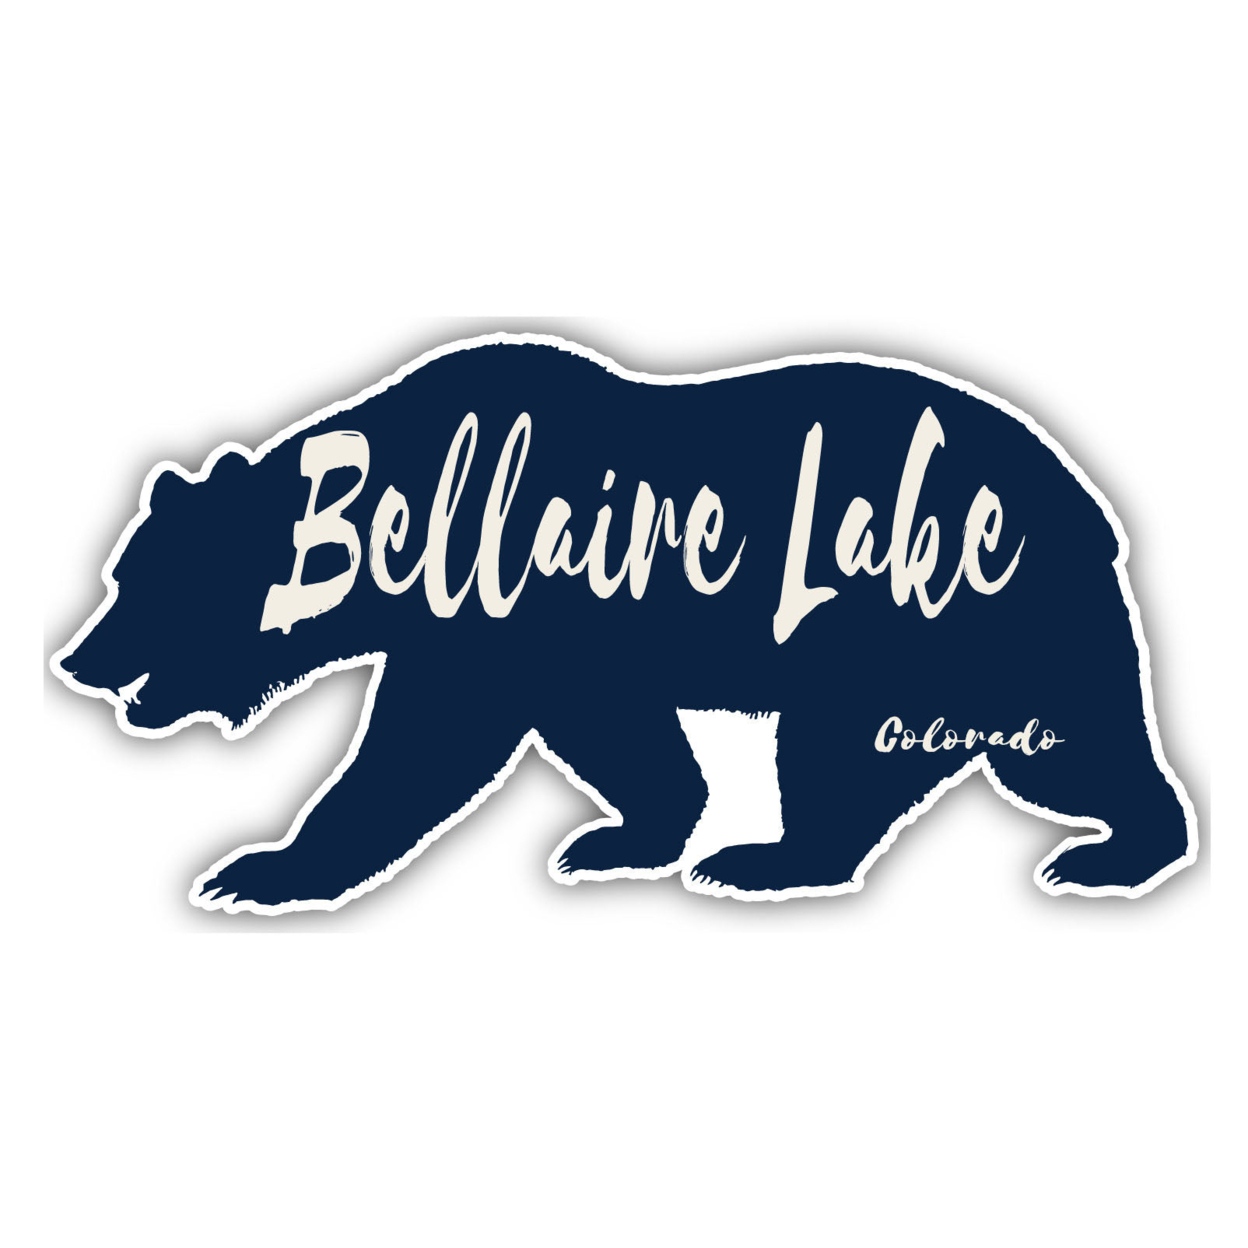 Bellaire Lake Colorado Souvenir Decorative Stickers (Choose Theme And Size) - Single Unit, 8-Inch, Bear